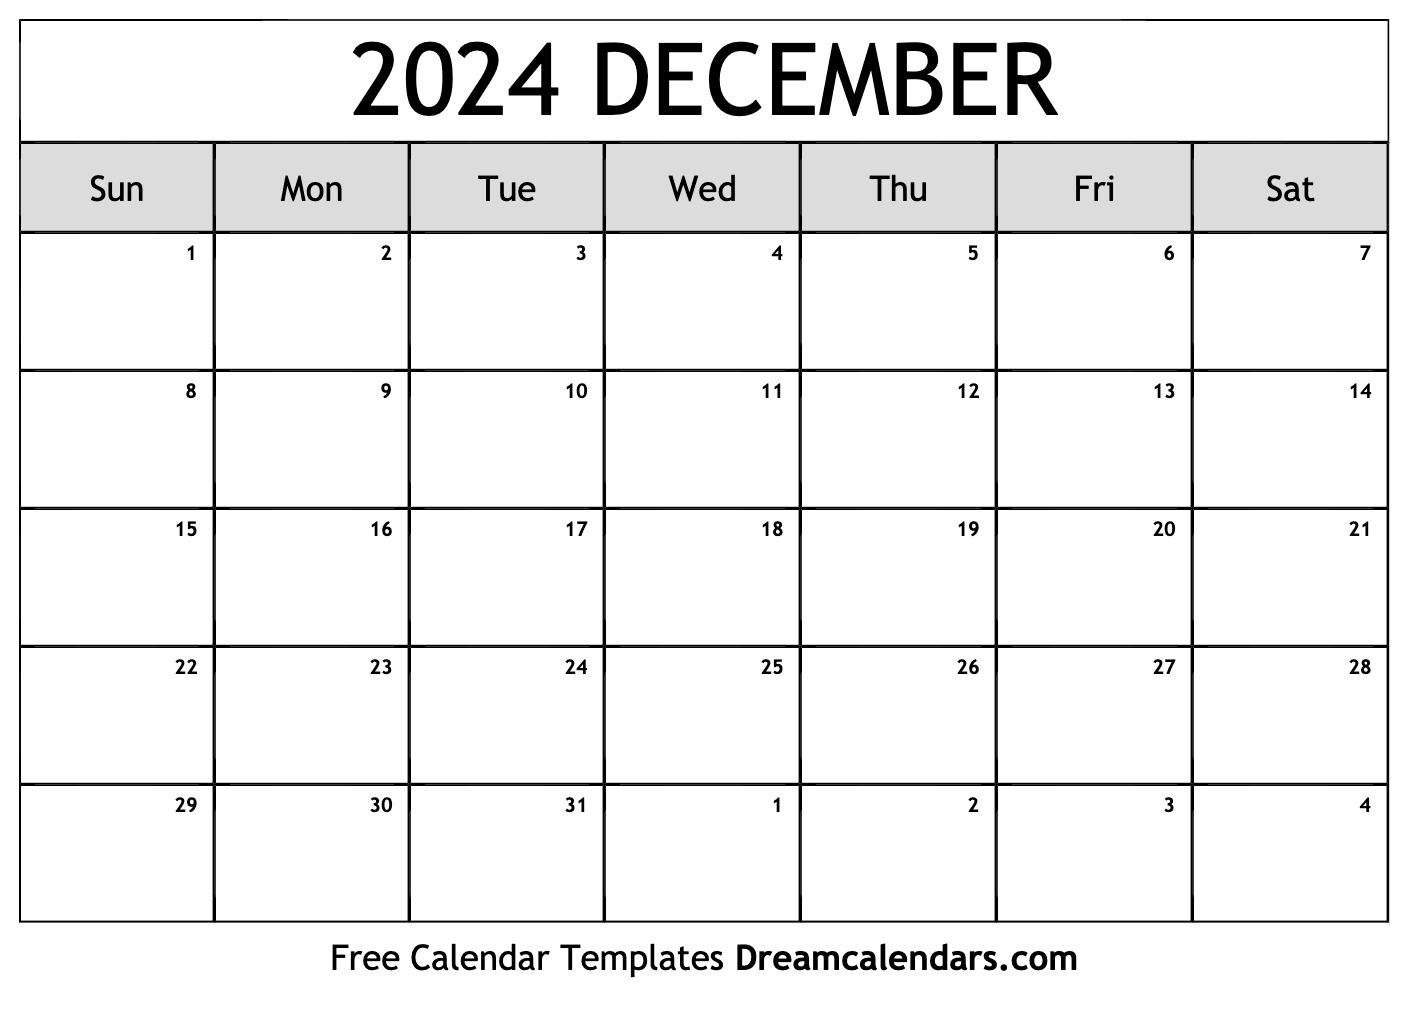 December 2024 Calendar | Free Blank Printable With Holidays | Printable Calendar 2024 December